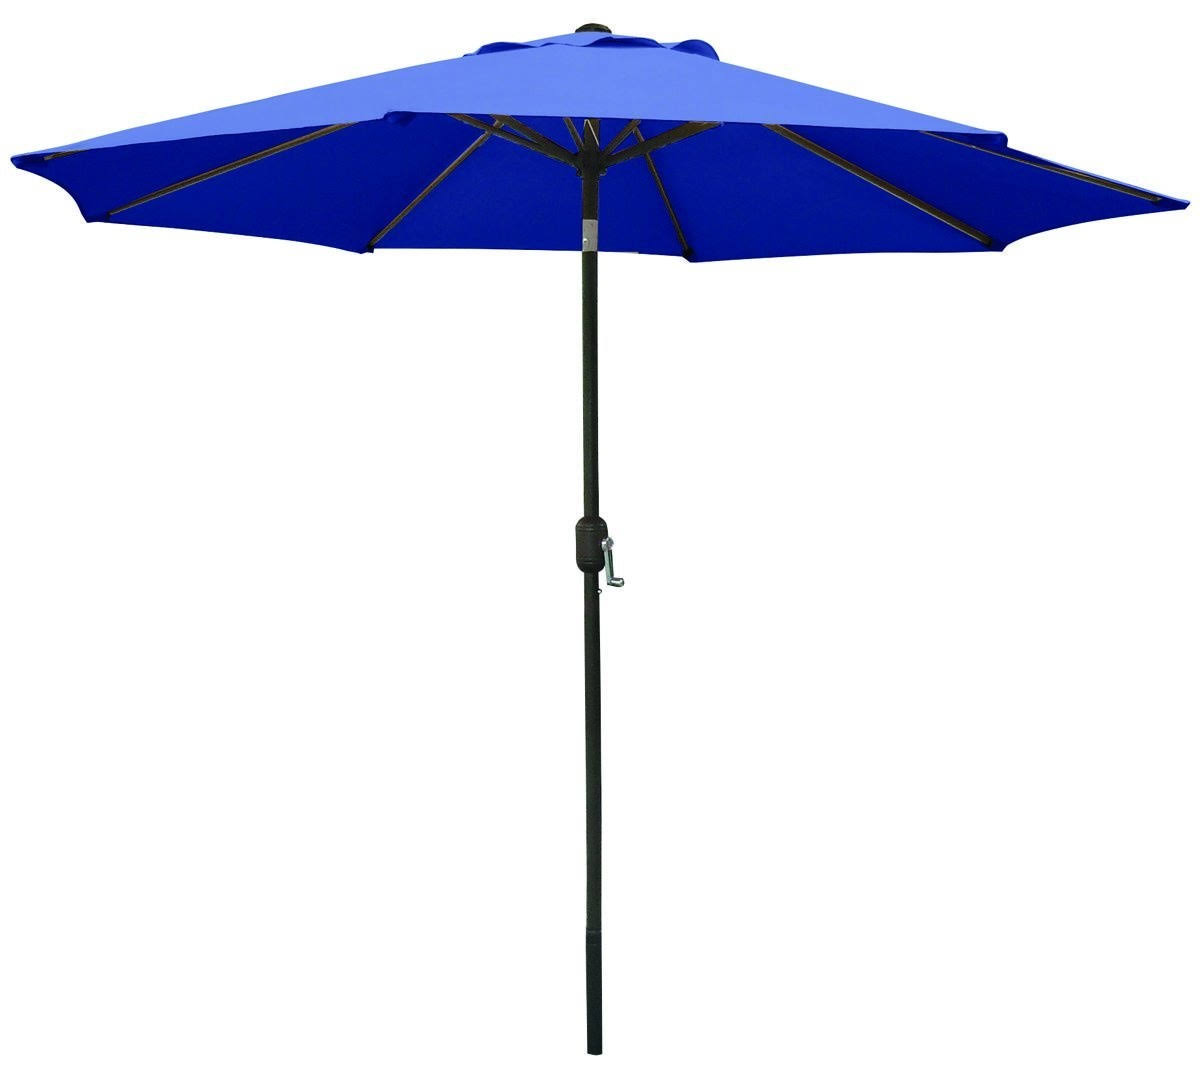 Bond Manufacturing Crank Style Umbrella - Blue, 9'